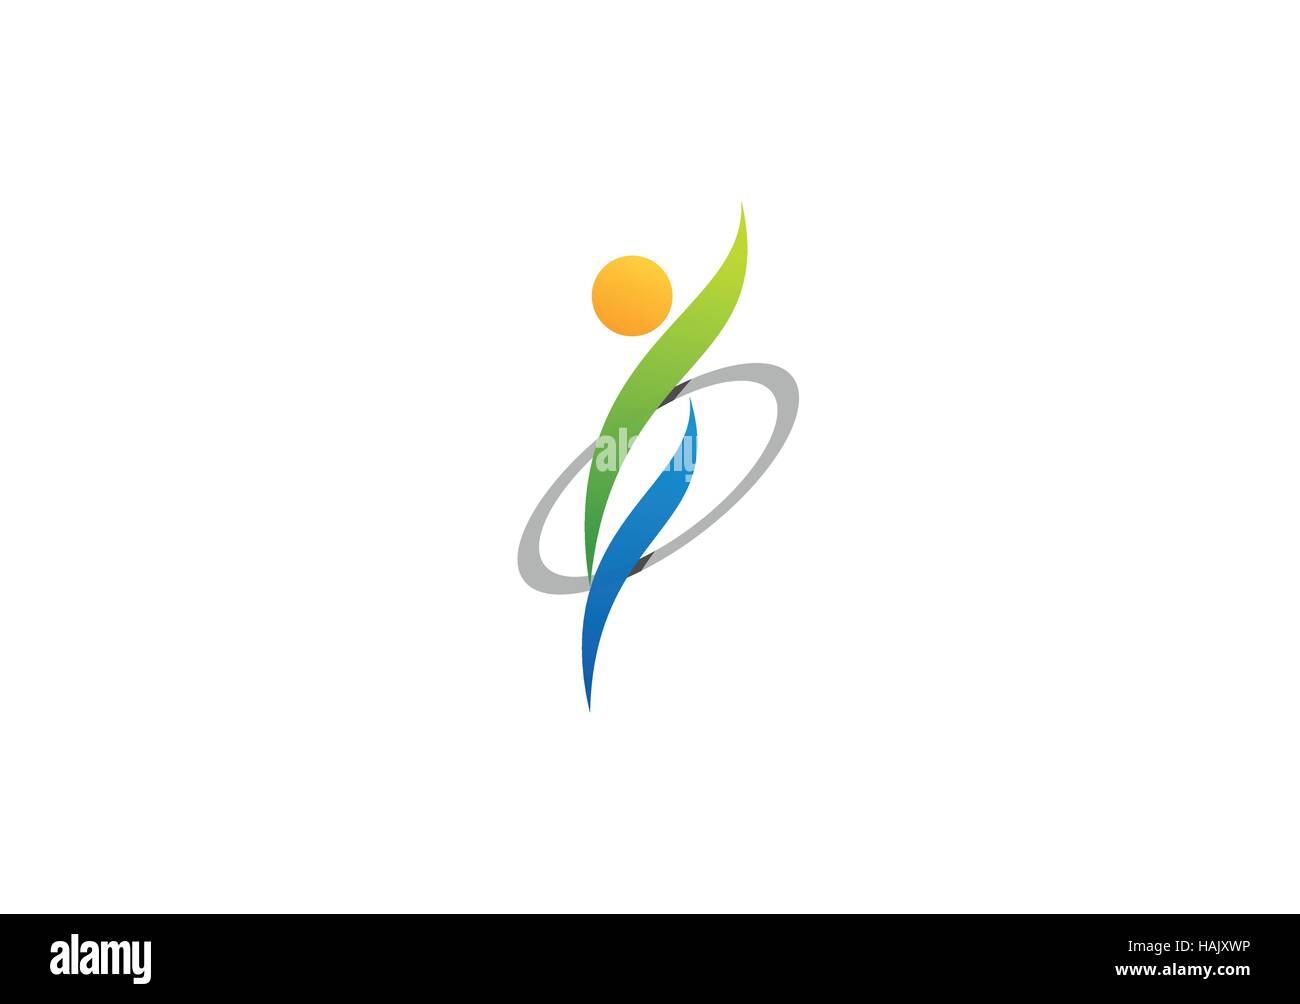 wellness logo icon, fitness health people logo concept, circle people healthy symbol vector design Stock Vector